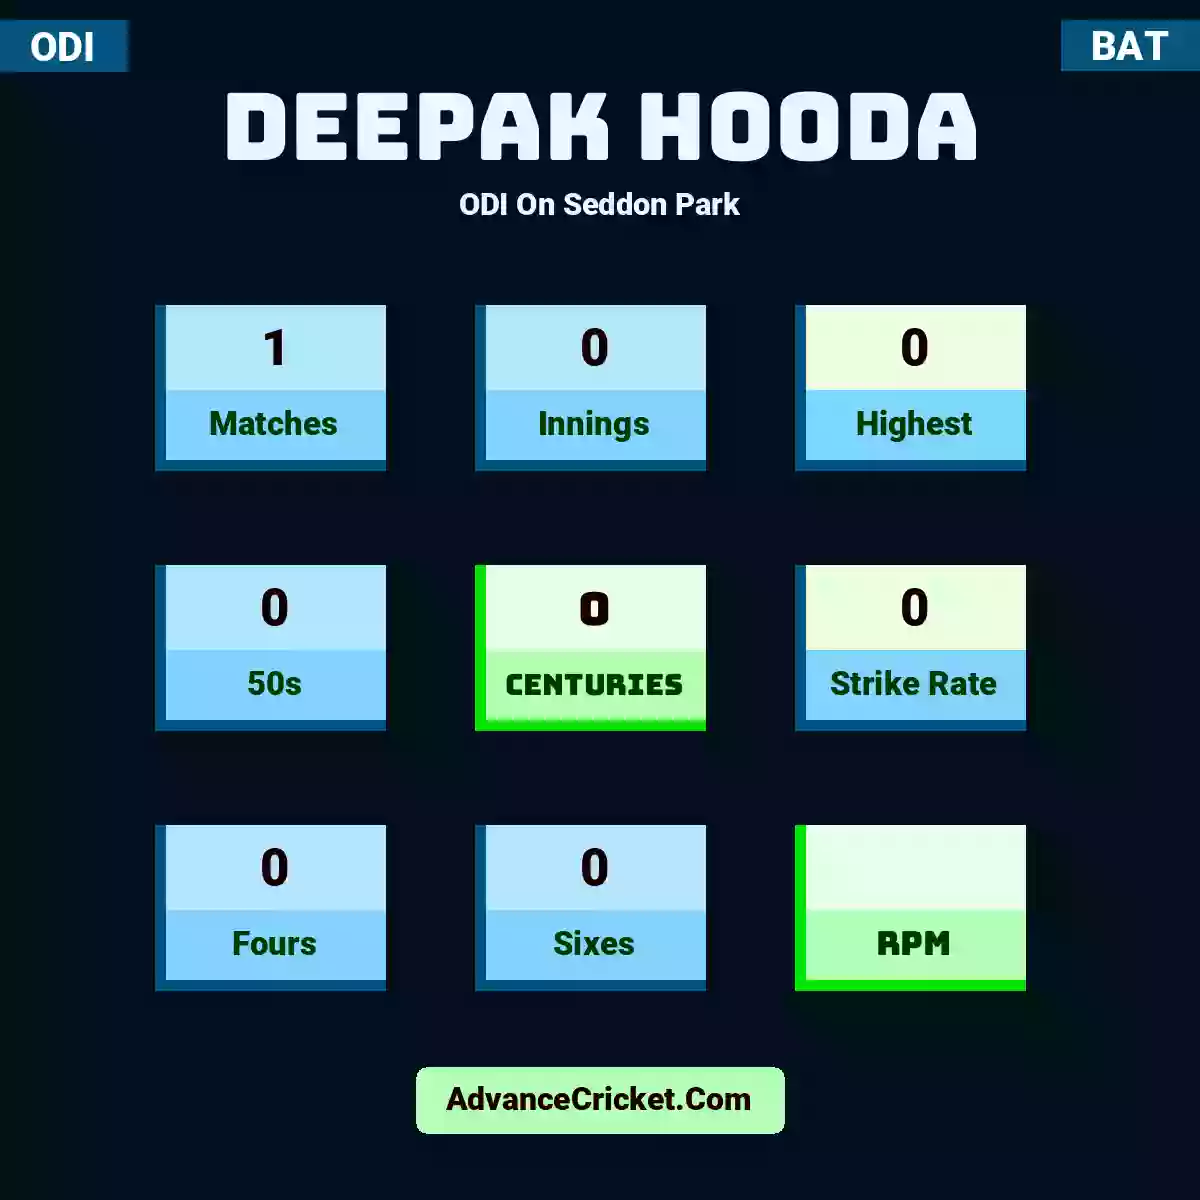 Deepak Hooda ODI  On Seddon Park, Deepak Hooda played 1 matches, scored 0 runs as highest, 0 half-centuries, and 0 centuries, with a strike rate of 0. D.Hooda hit 0 fours and 0 sixes.